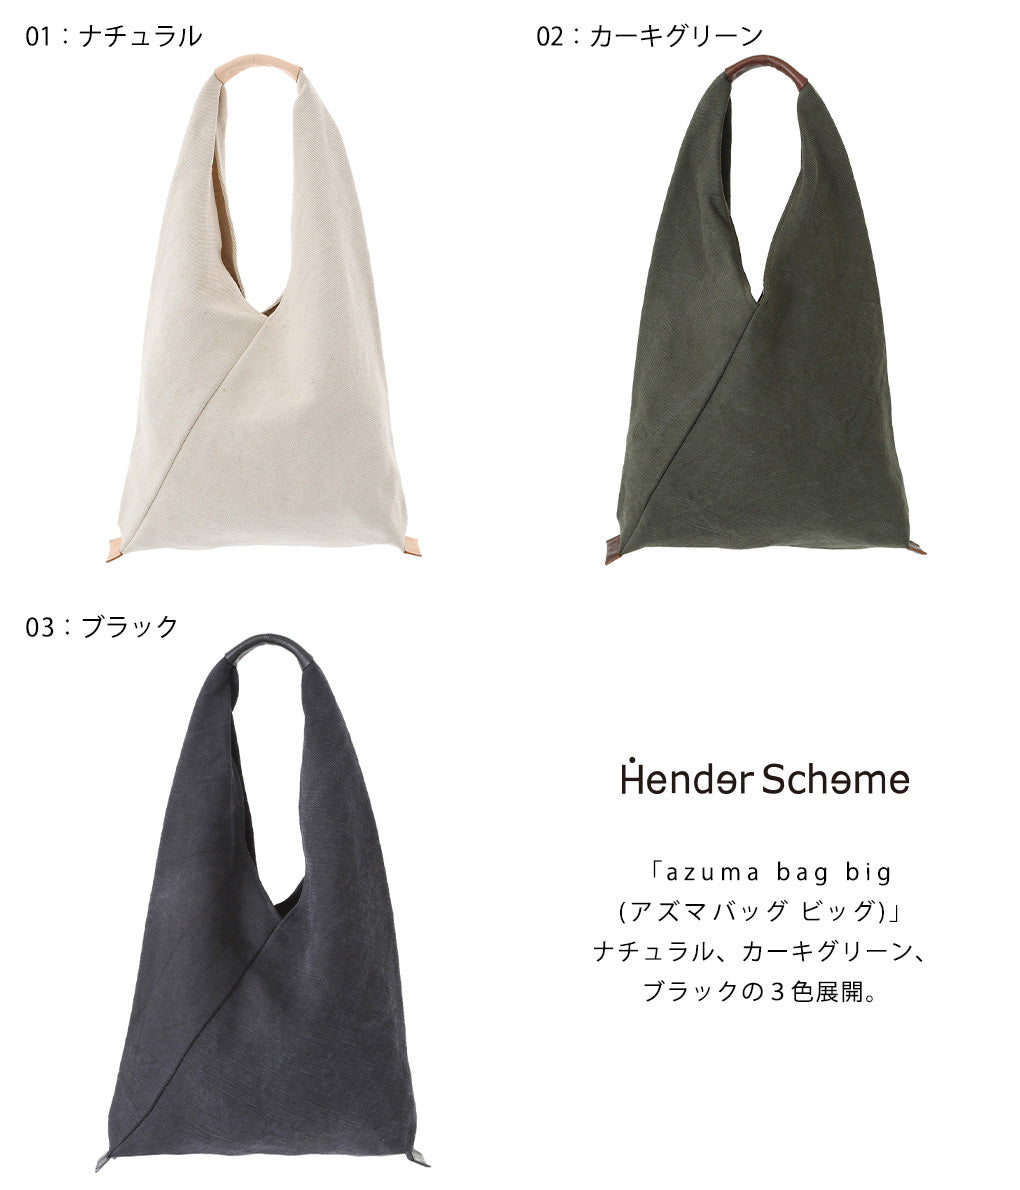 Hender Scheme azuma bag big – unexpected store